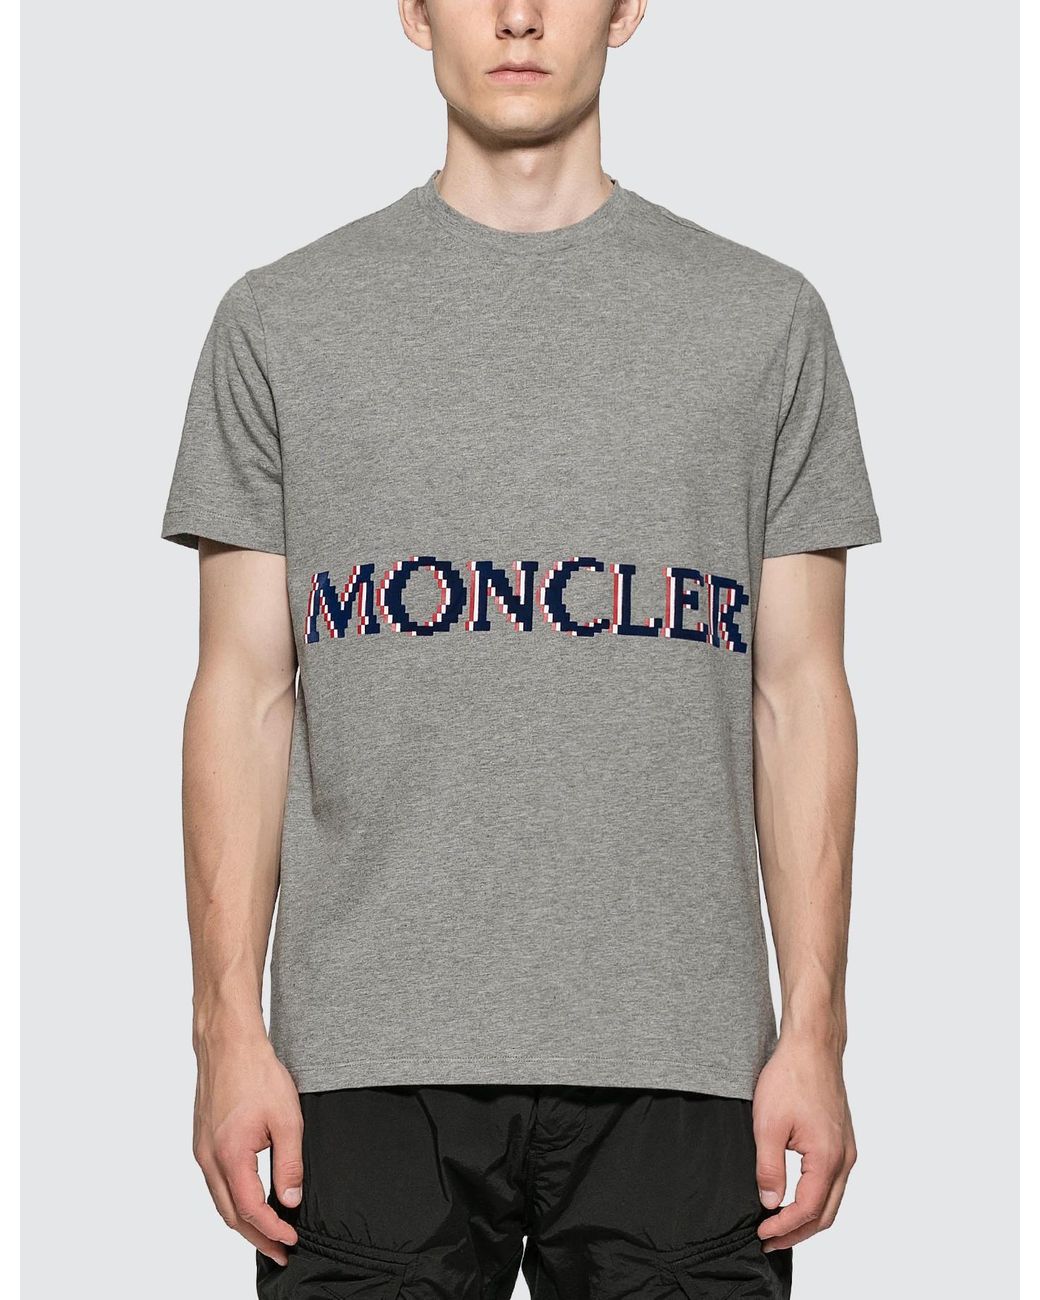 Moncler Genius Cotton 1952 Logo T-shirt in Grey (Gray) for Men - Lyst